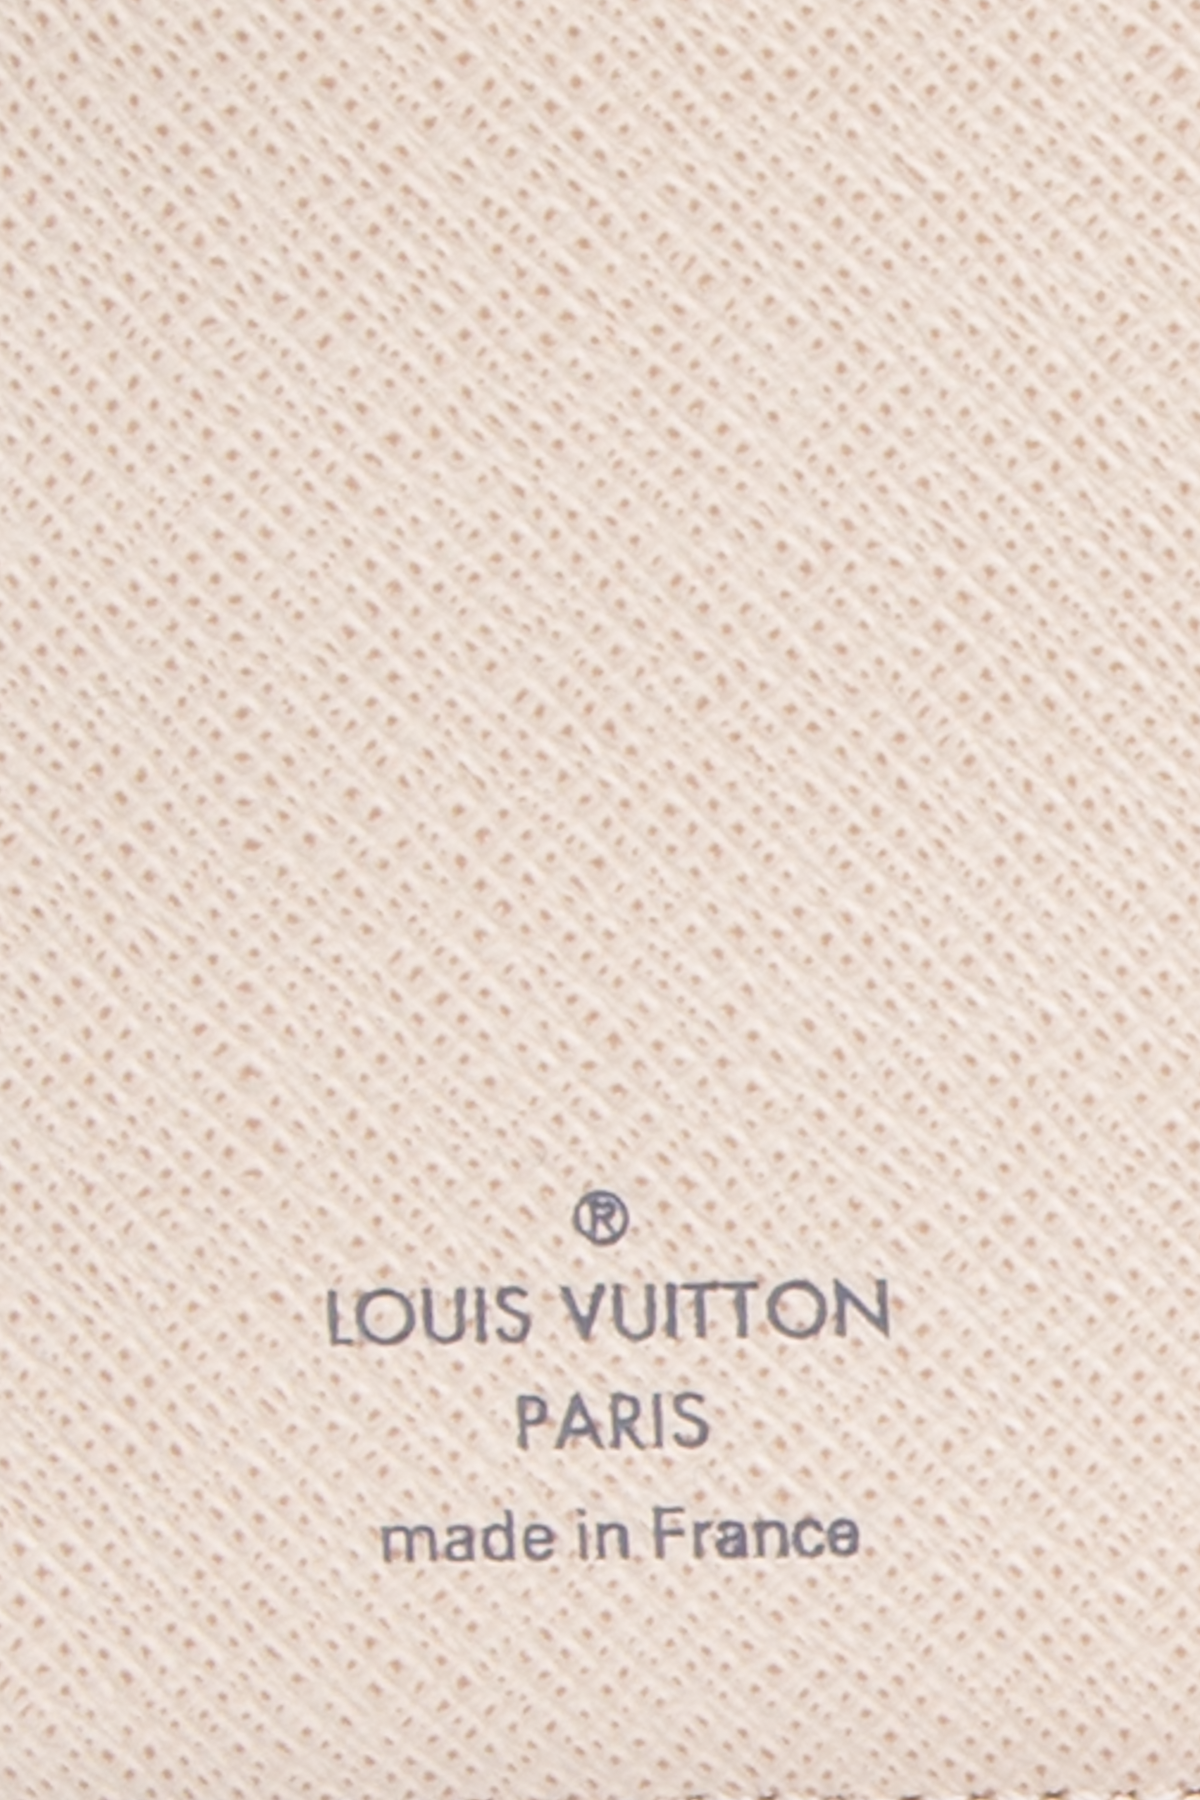 Louis Vuitton Small Ring Agenda Cover - Couture USA